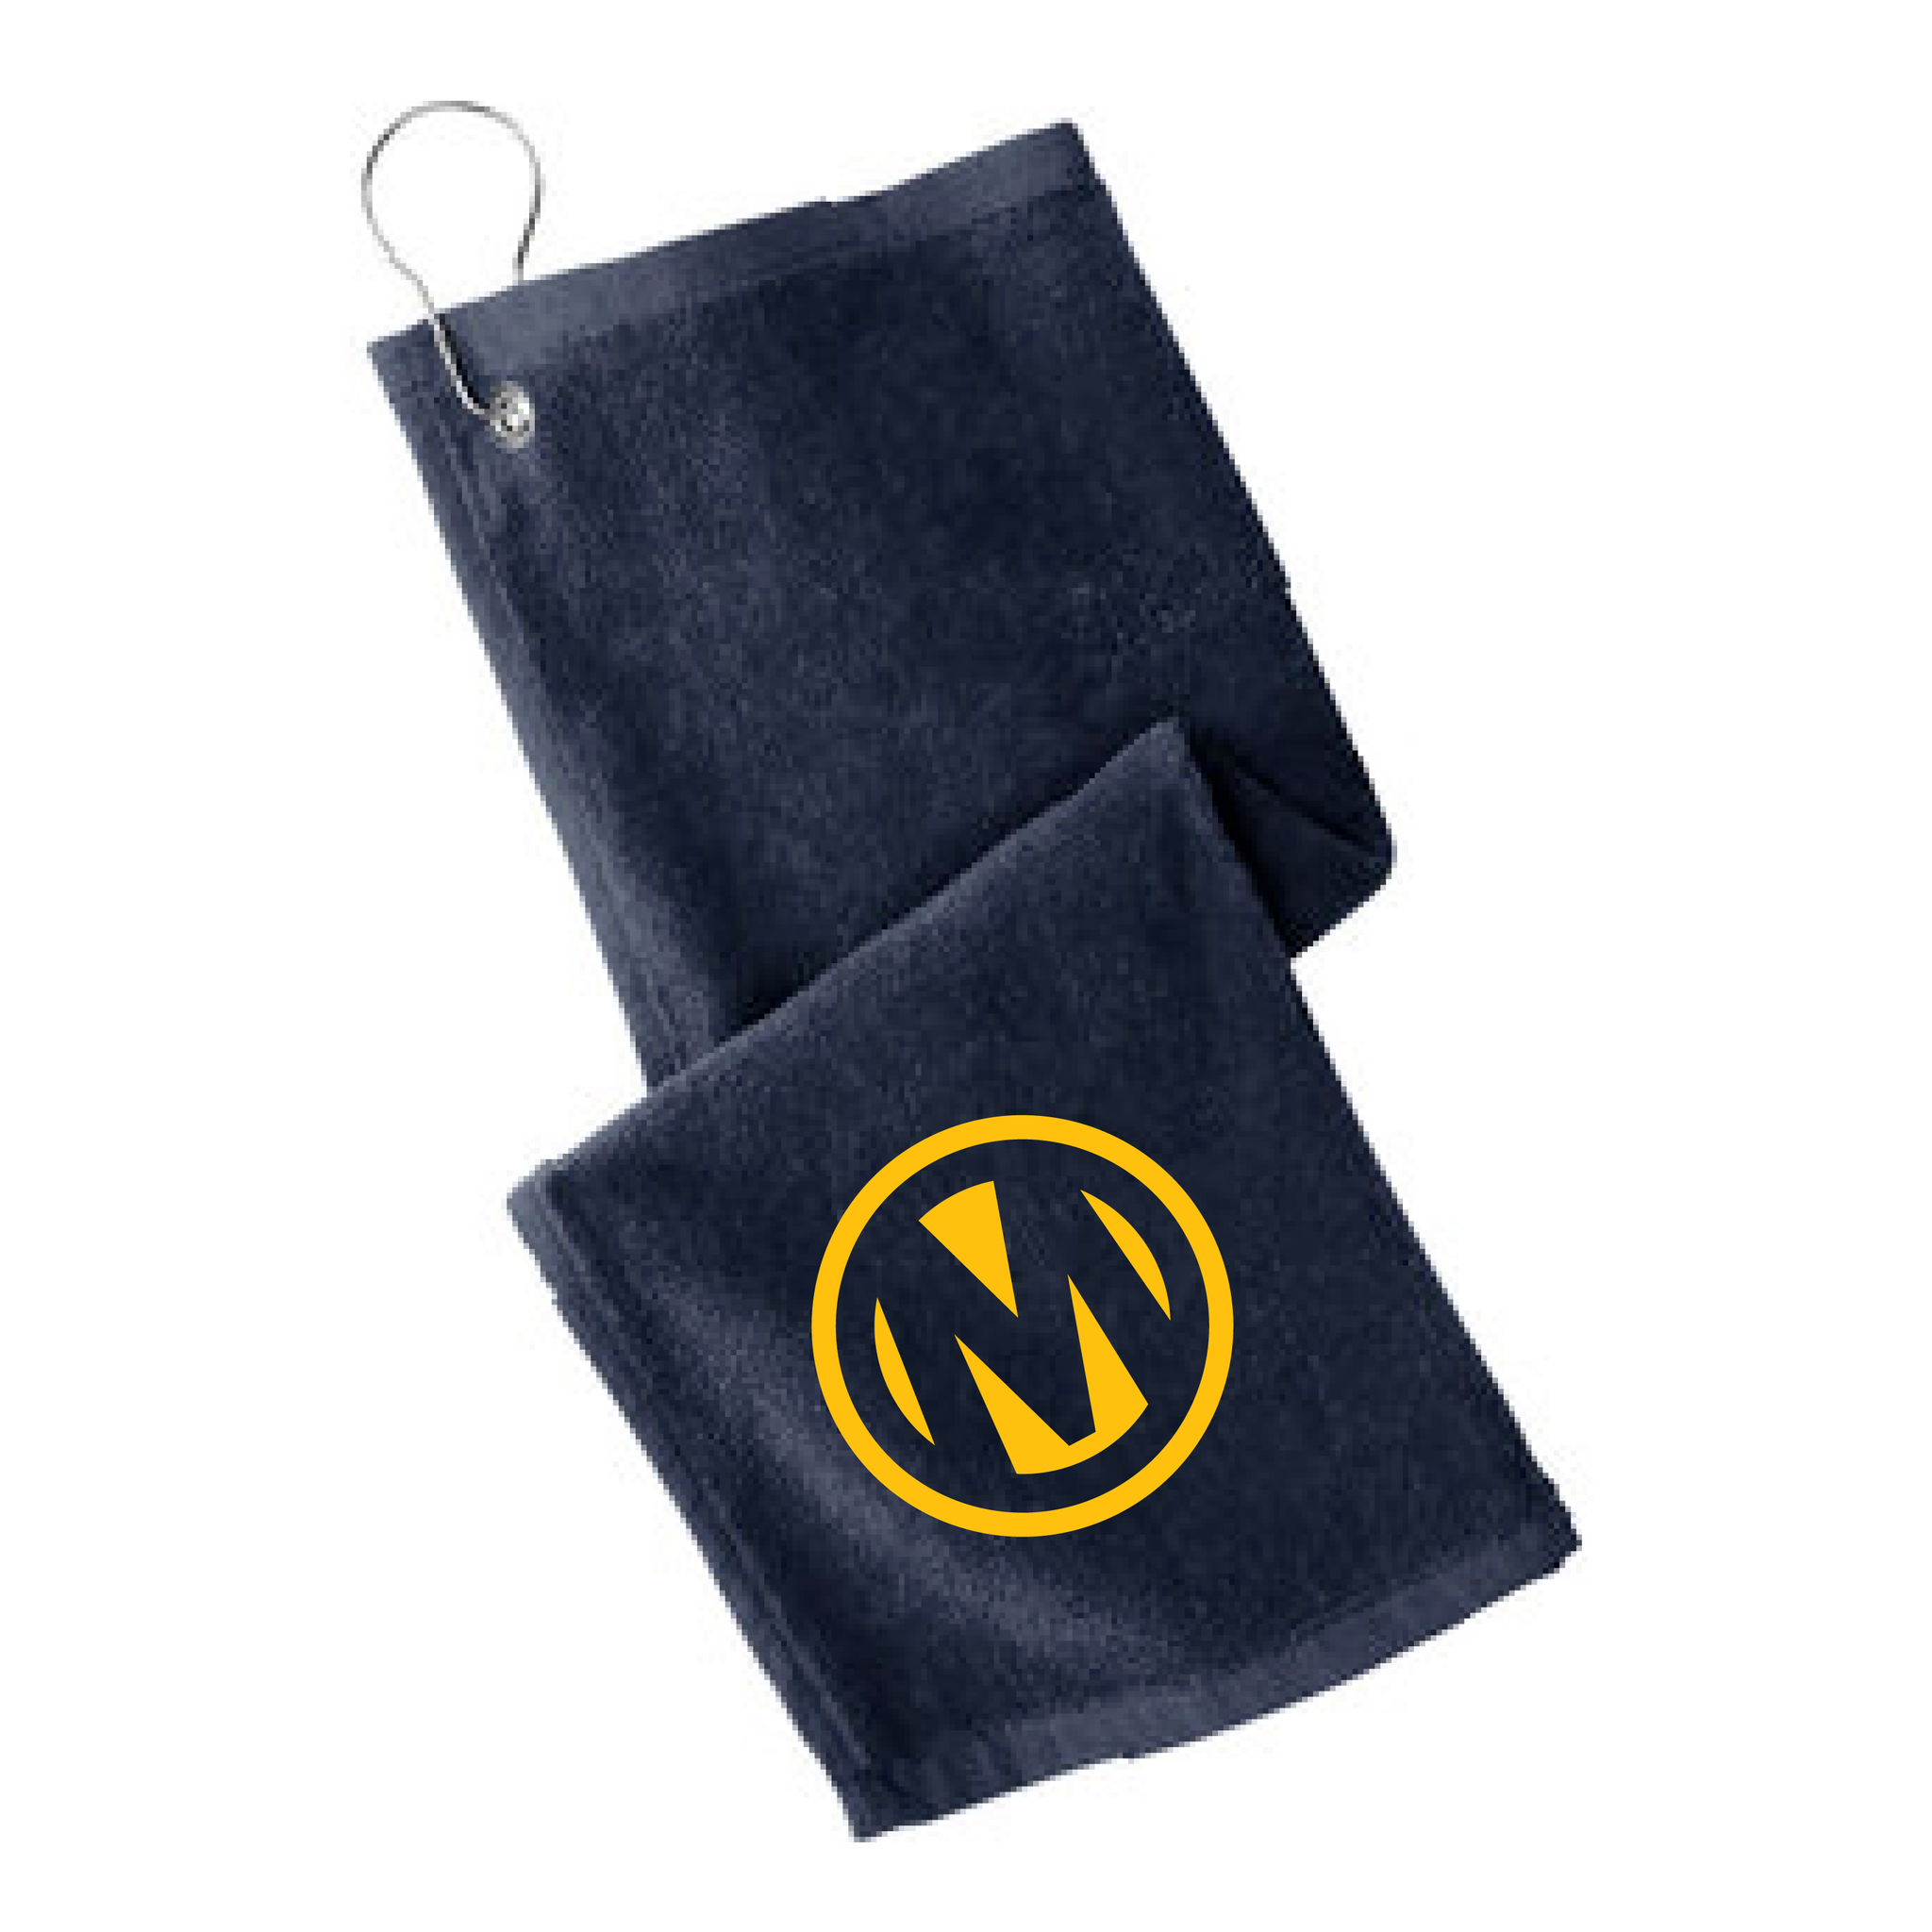 Manheim Louisville Golf Shoe Bag & Towel – Manheim Shop